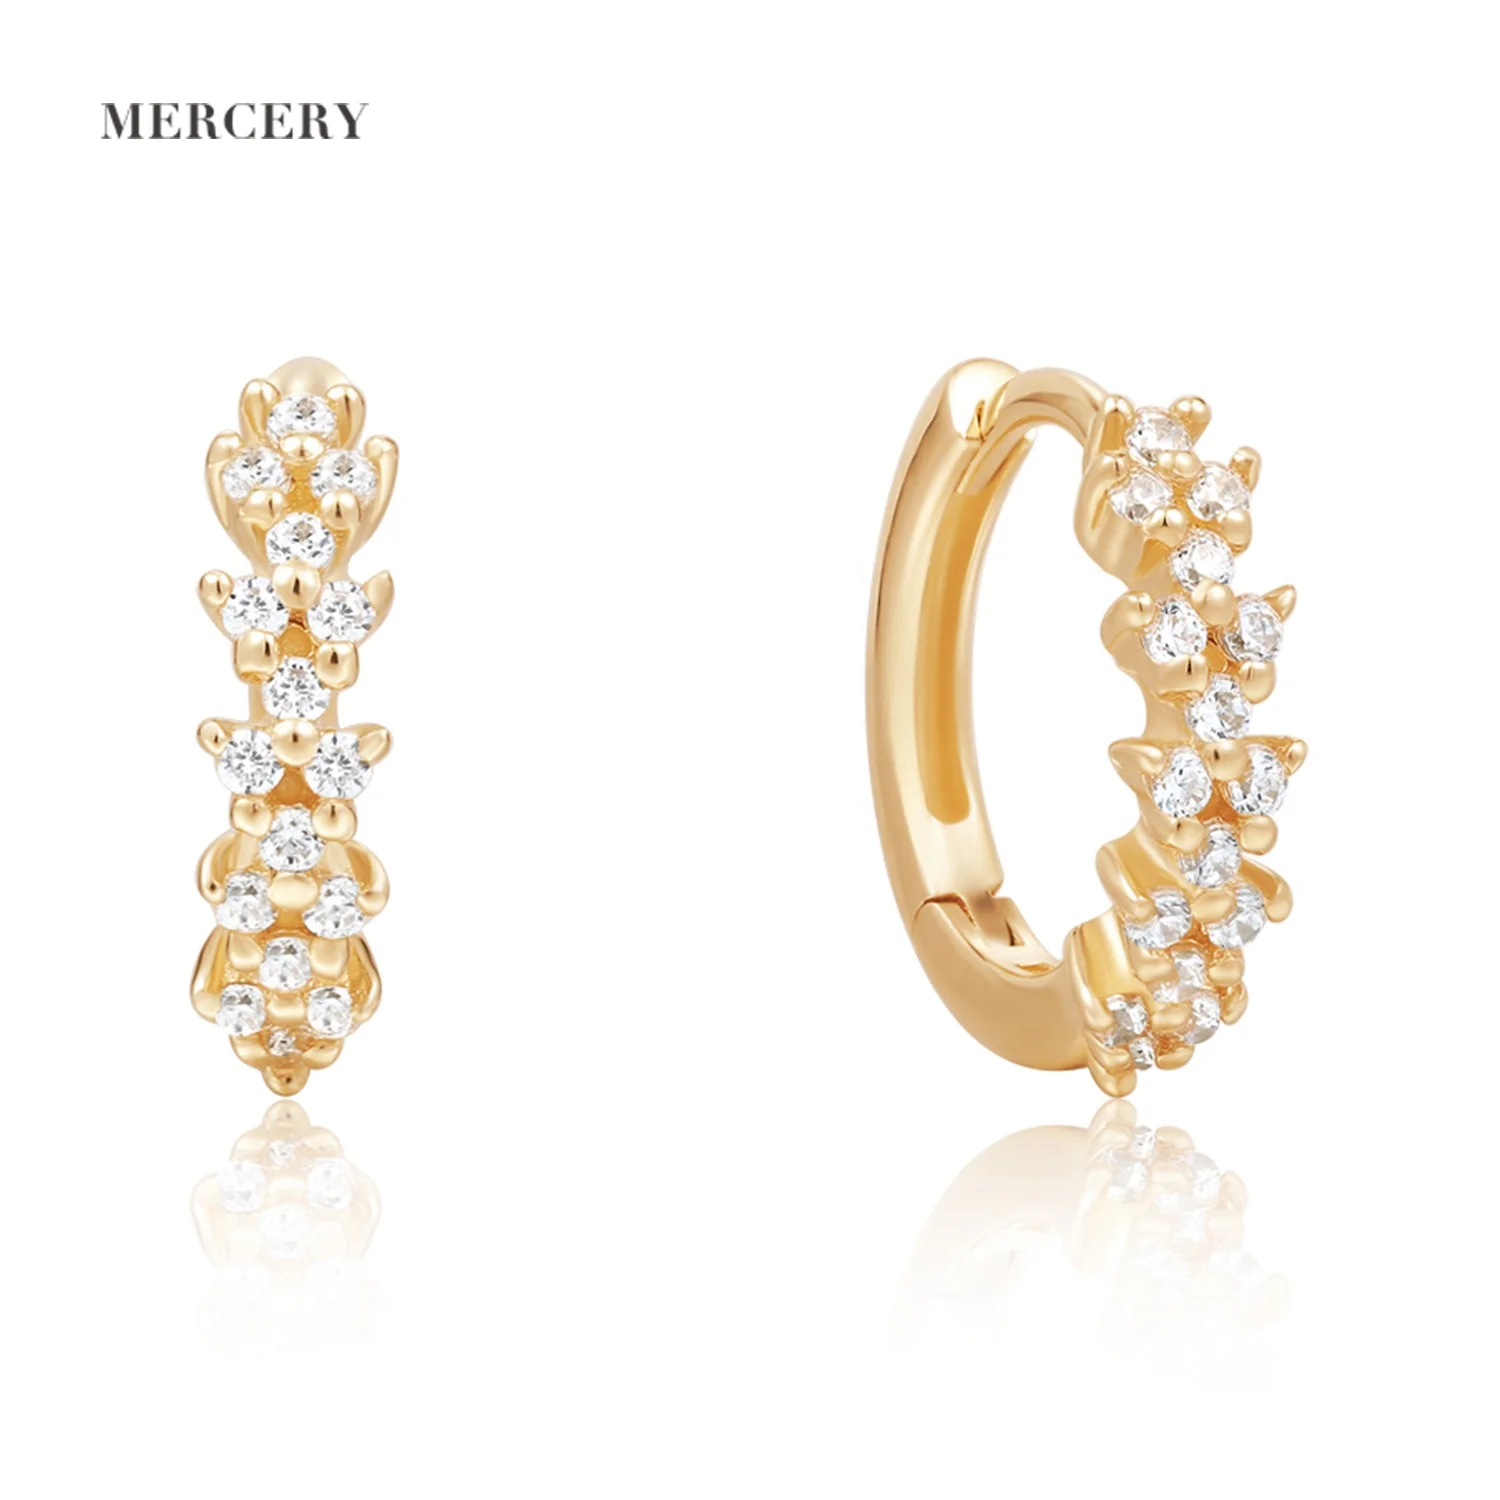 

Mercery Non Tarnish Earrings Jewellery Full Diamond Real 14k Solid Gold Wedding Earrings Hoop Huggies Earring Jewelry For Women